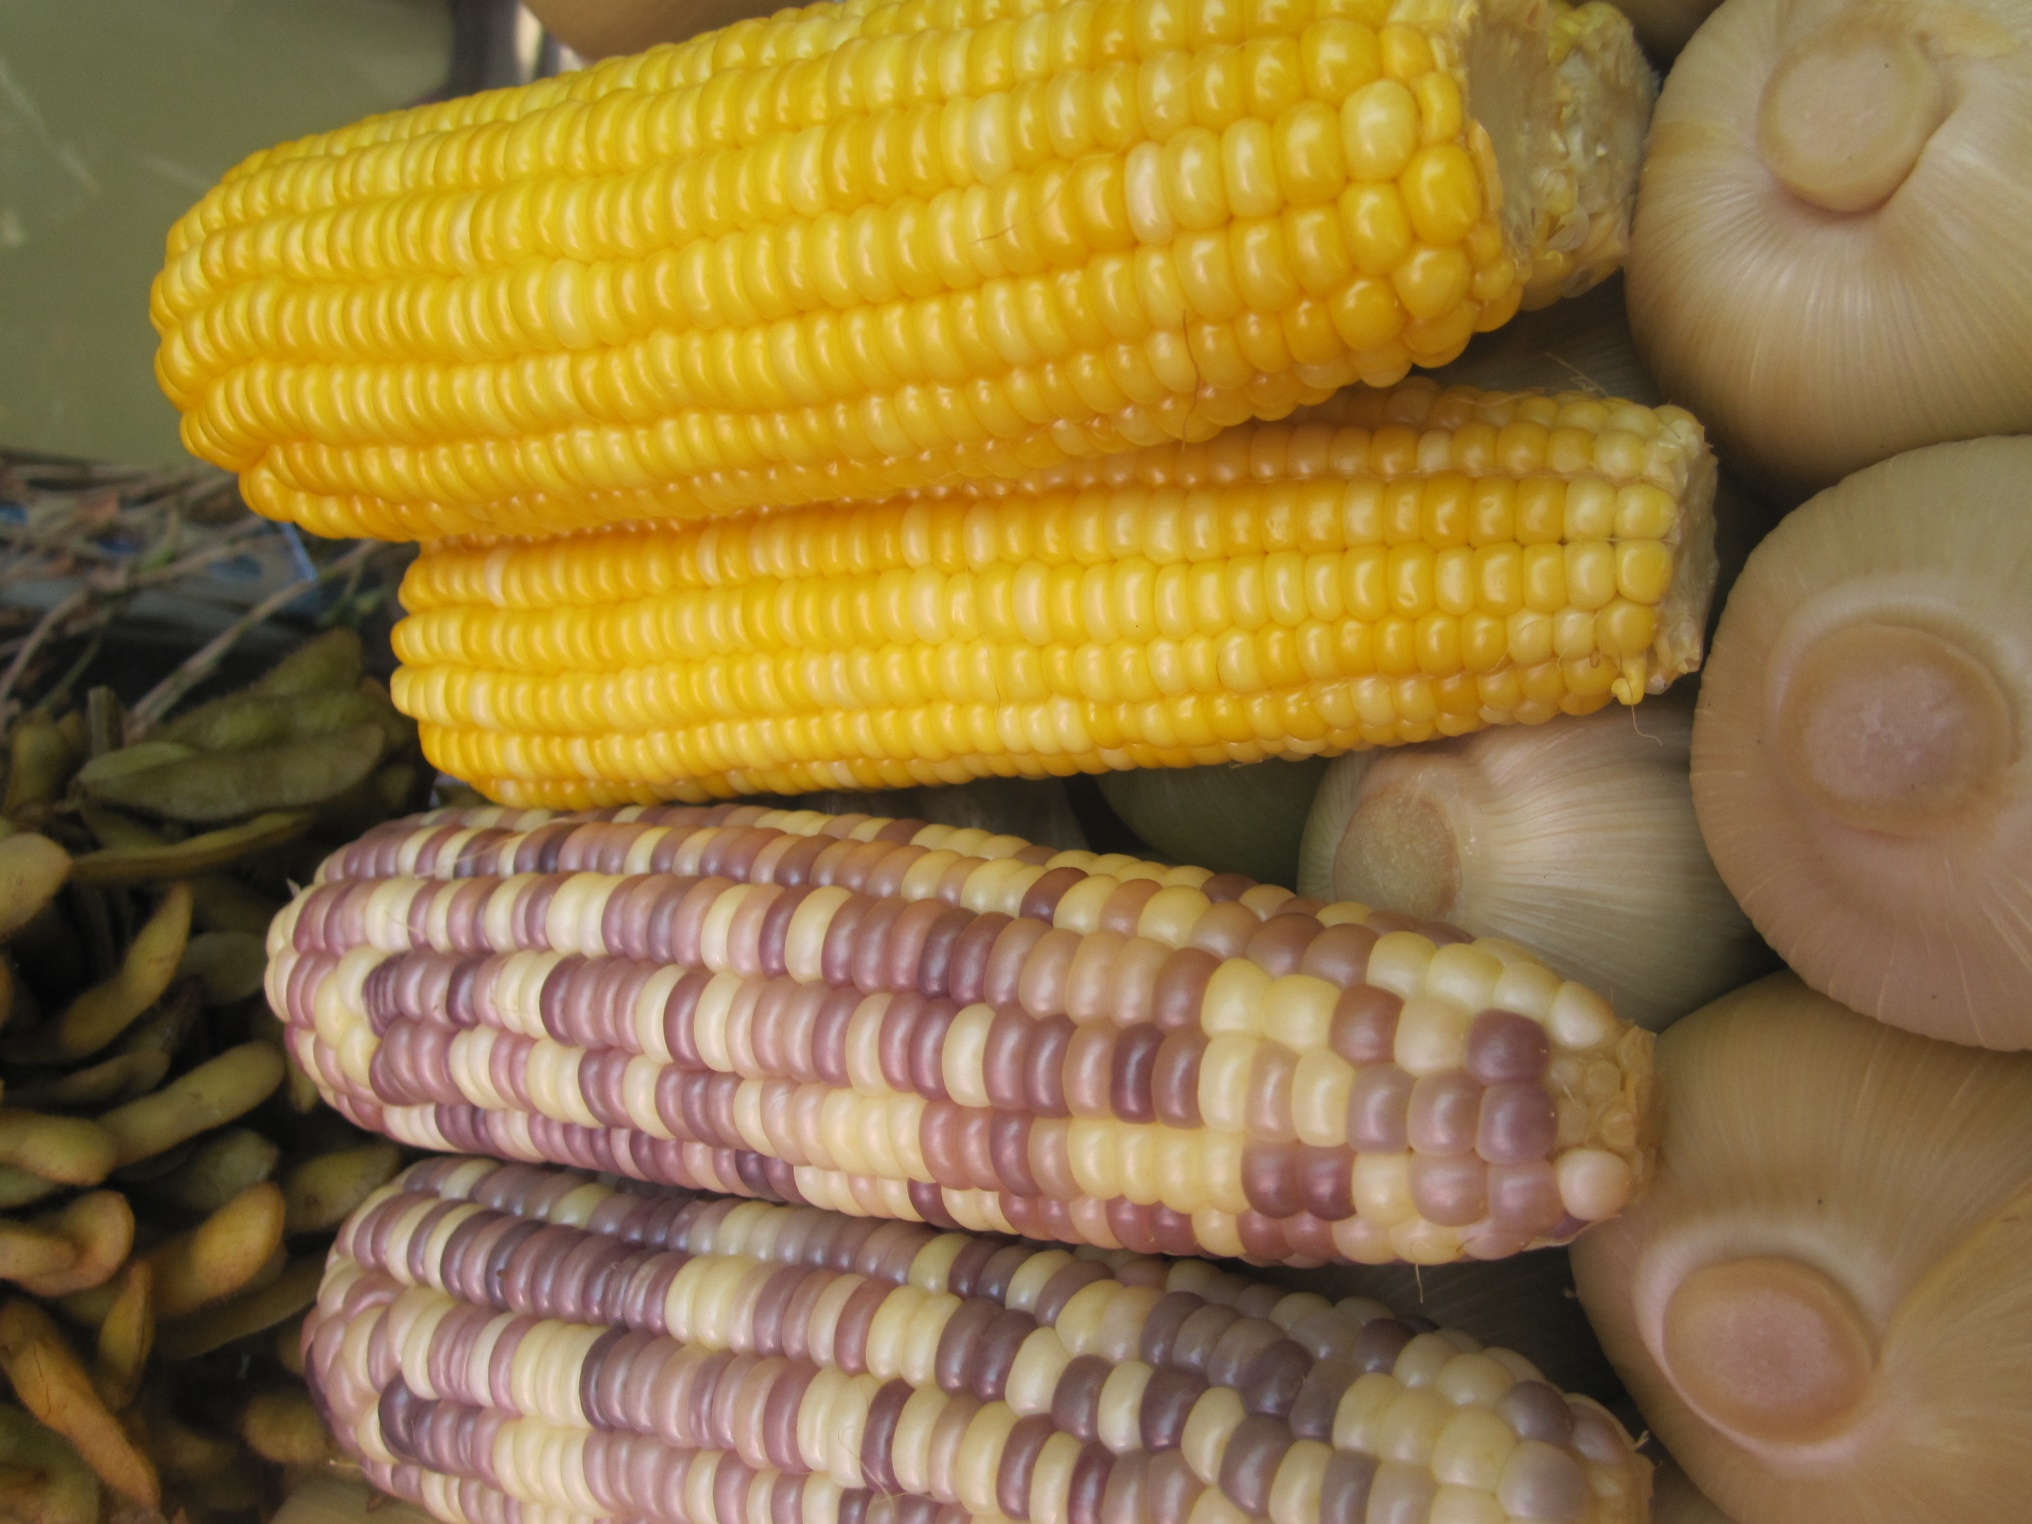 4 ears of corn on onions. 2 ears of corn are light yellow and purple. 2 ears of corn are all yellow.